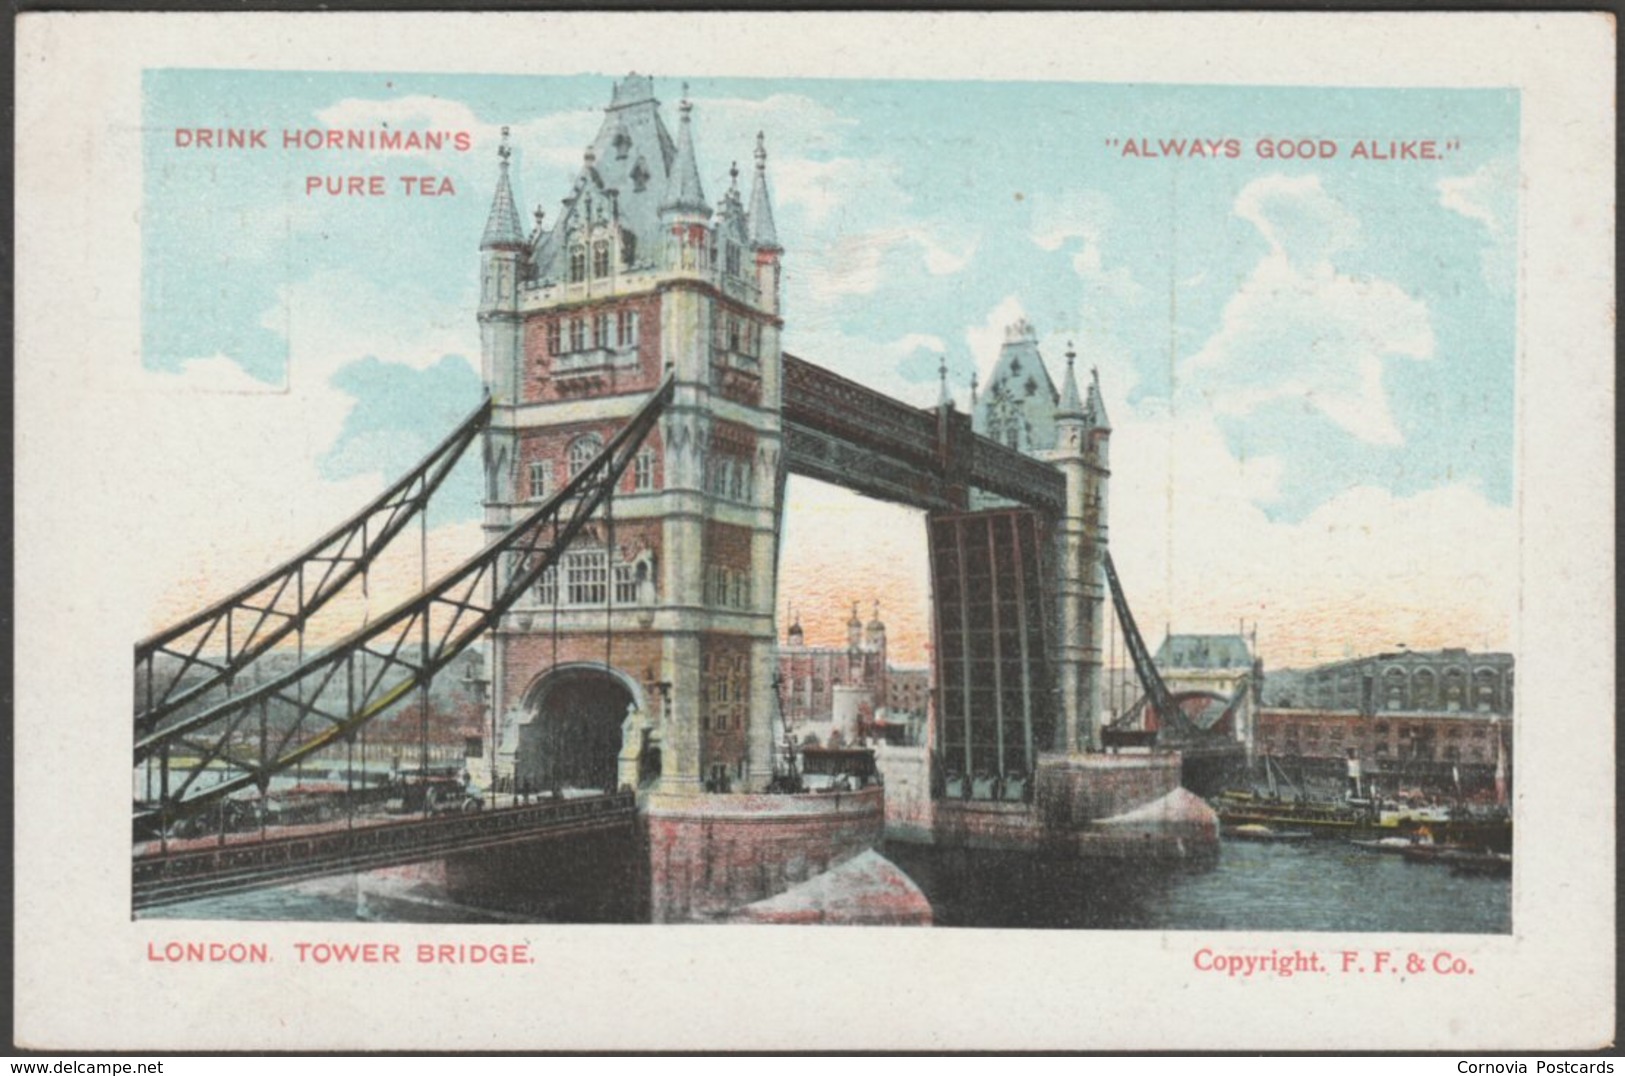 Horniman's Pure Tea - Tower Bridge, London, C.1905 - Frankel Postcard - Advertising